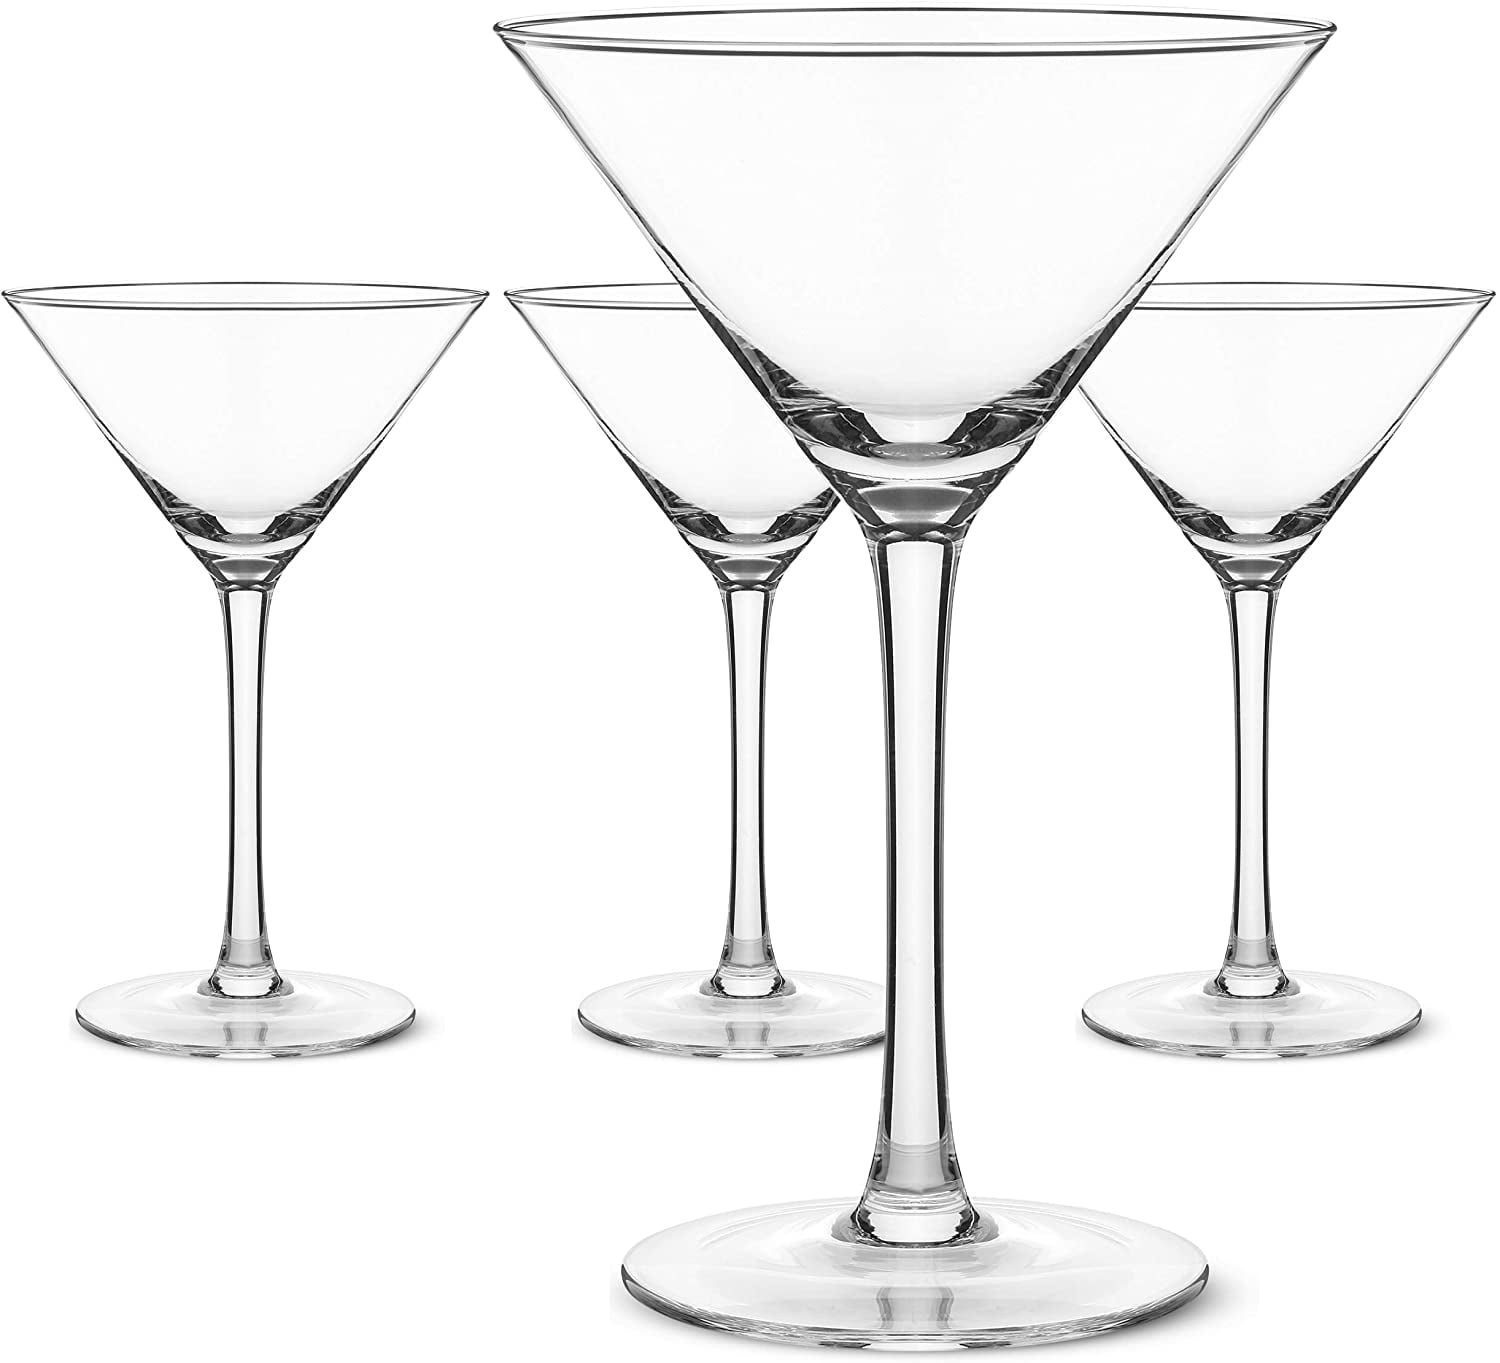 Elegant Cocktail Glasses for Bar Pisco Sour Elixir Glassware Martini Glasses Set of 4 Martini Hand Blown Crystal Martini Glasses with Stem Clear Manhattan 9oz Gimlet Cosmopolitan